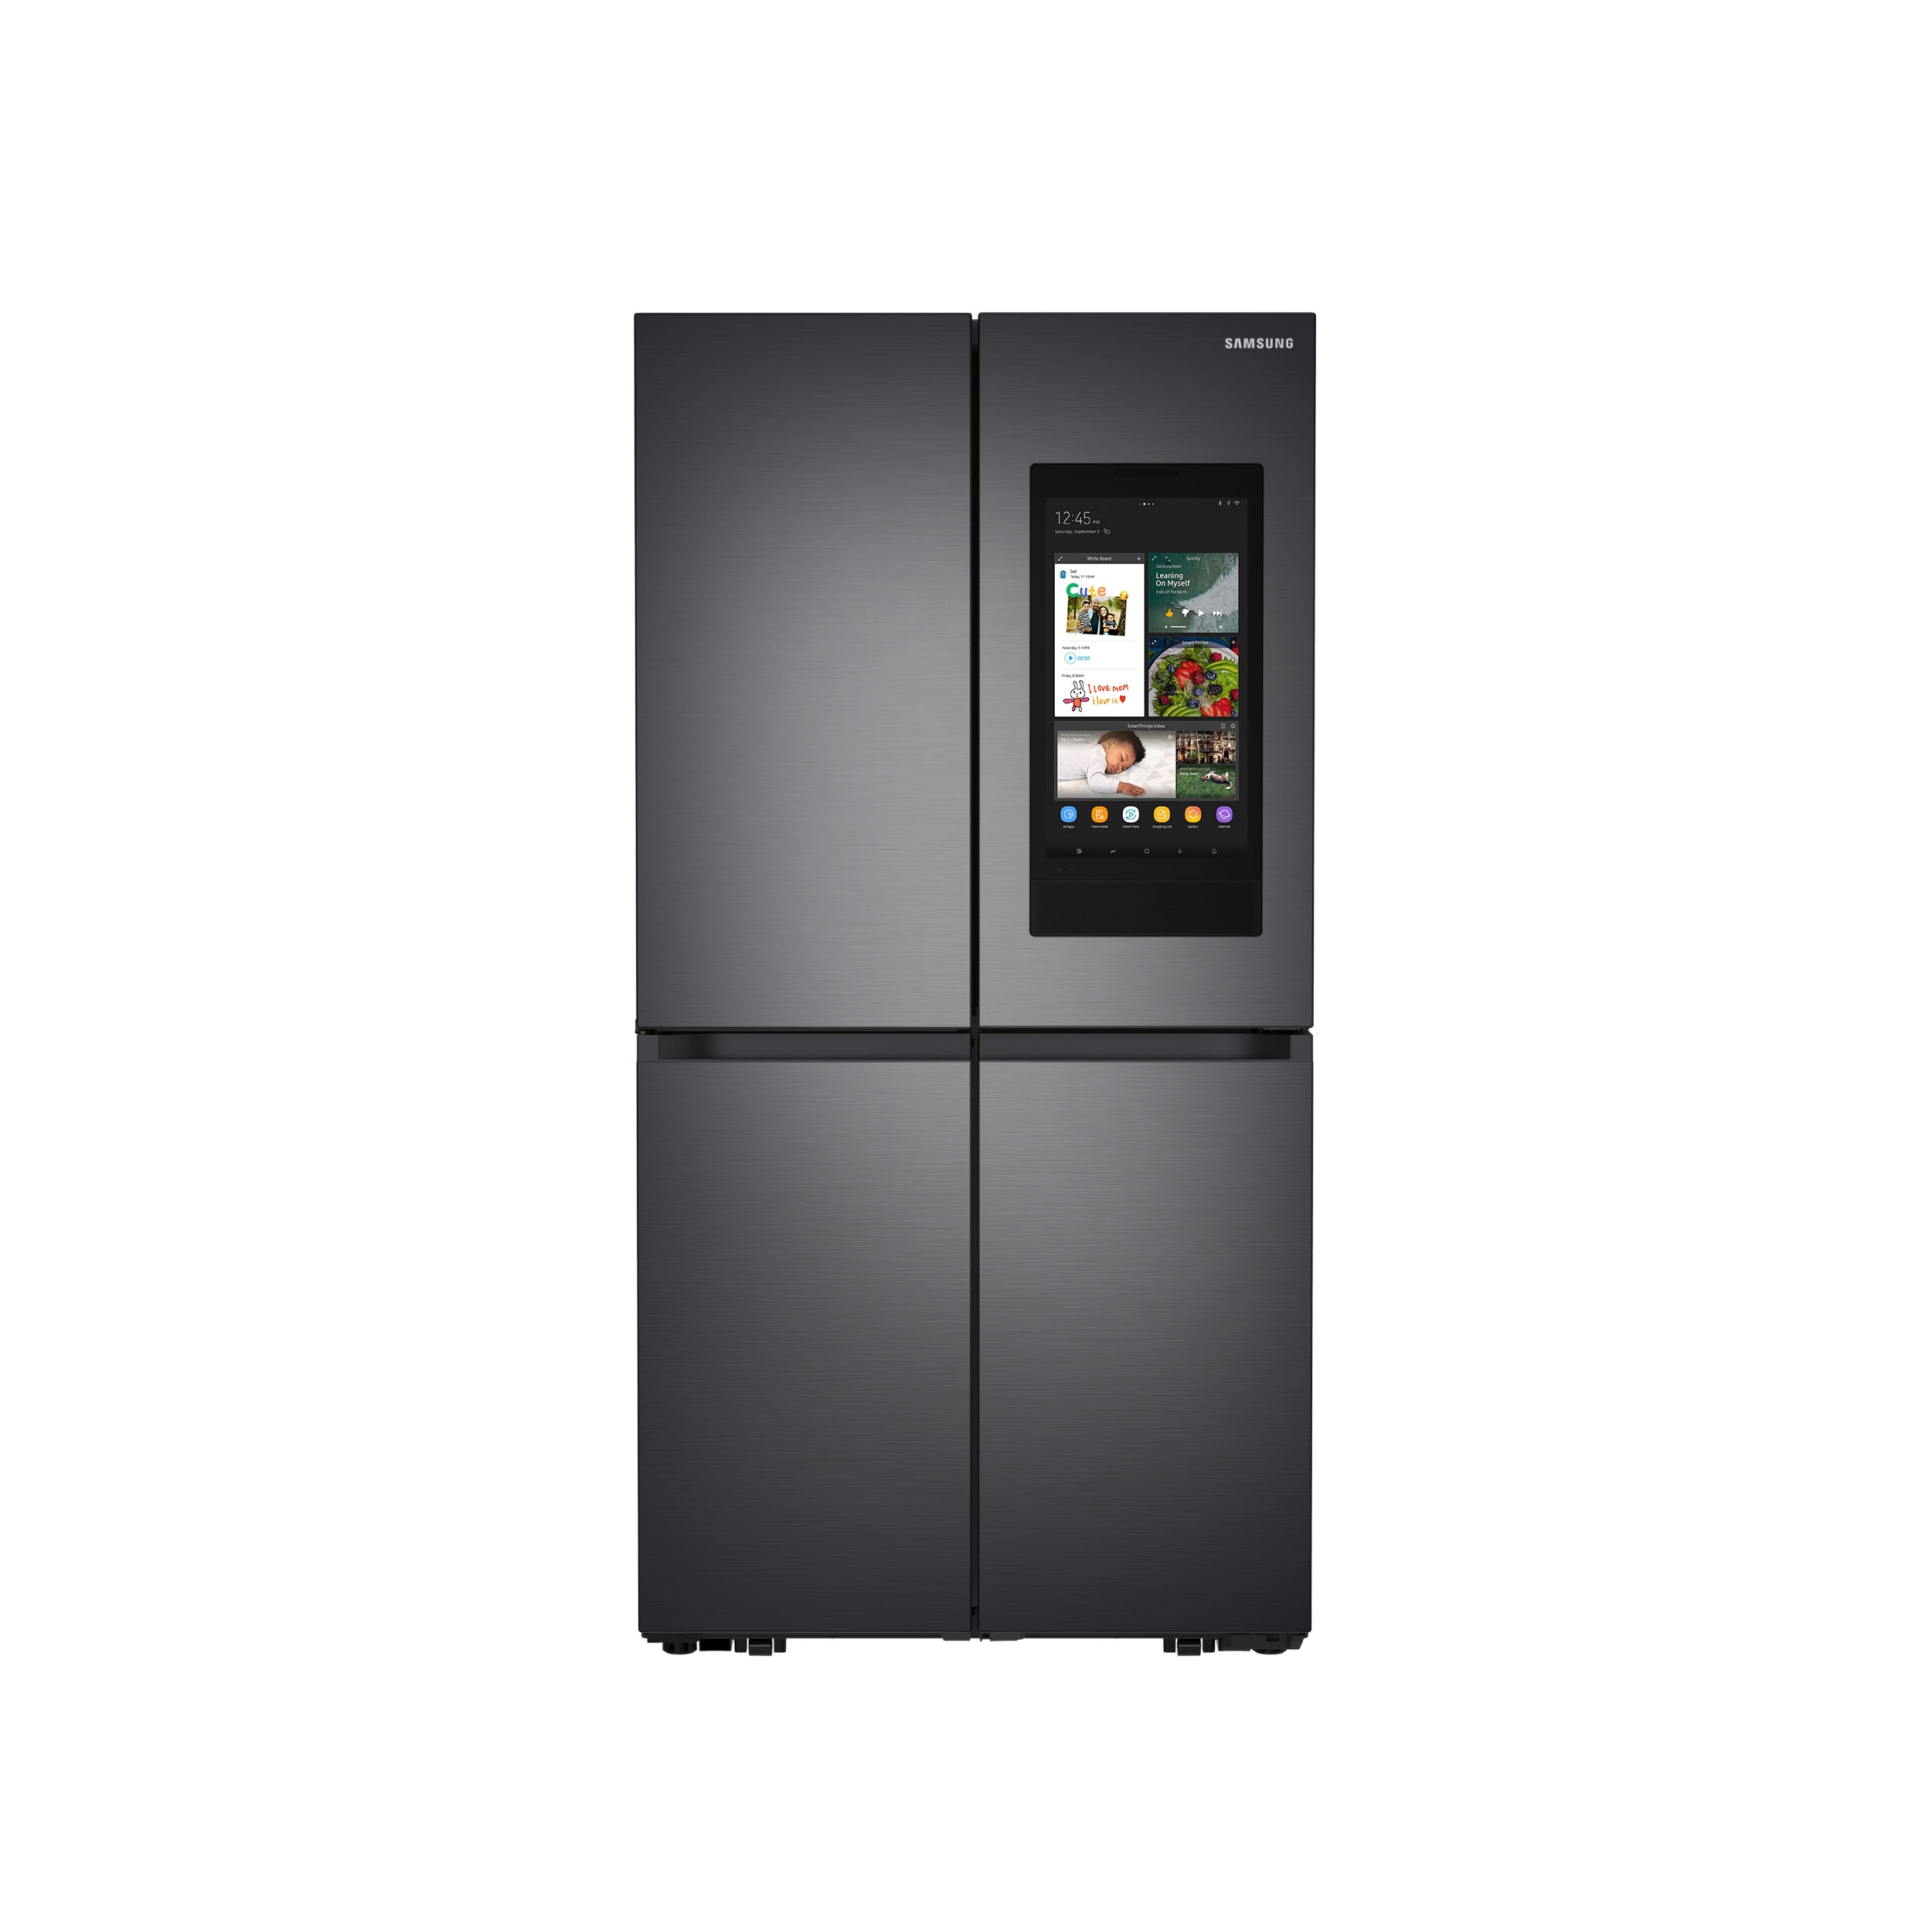 Samsung Smart Refrigerators Cost